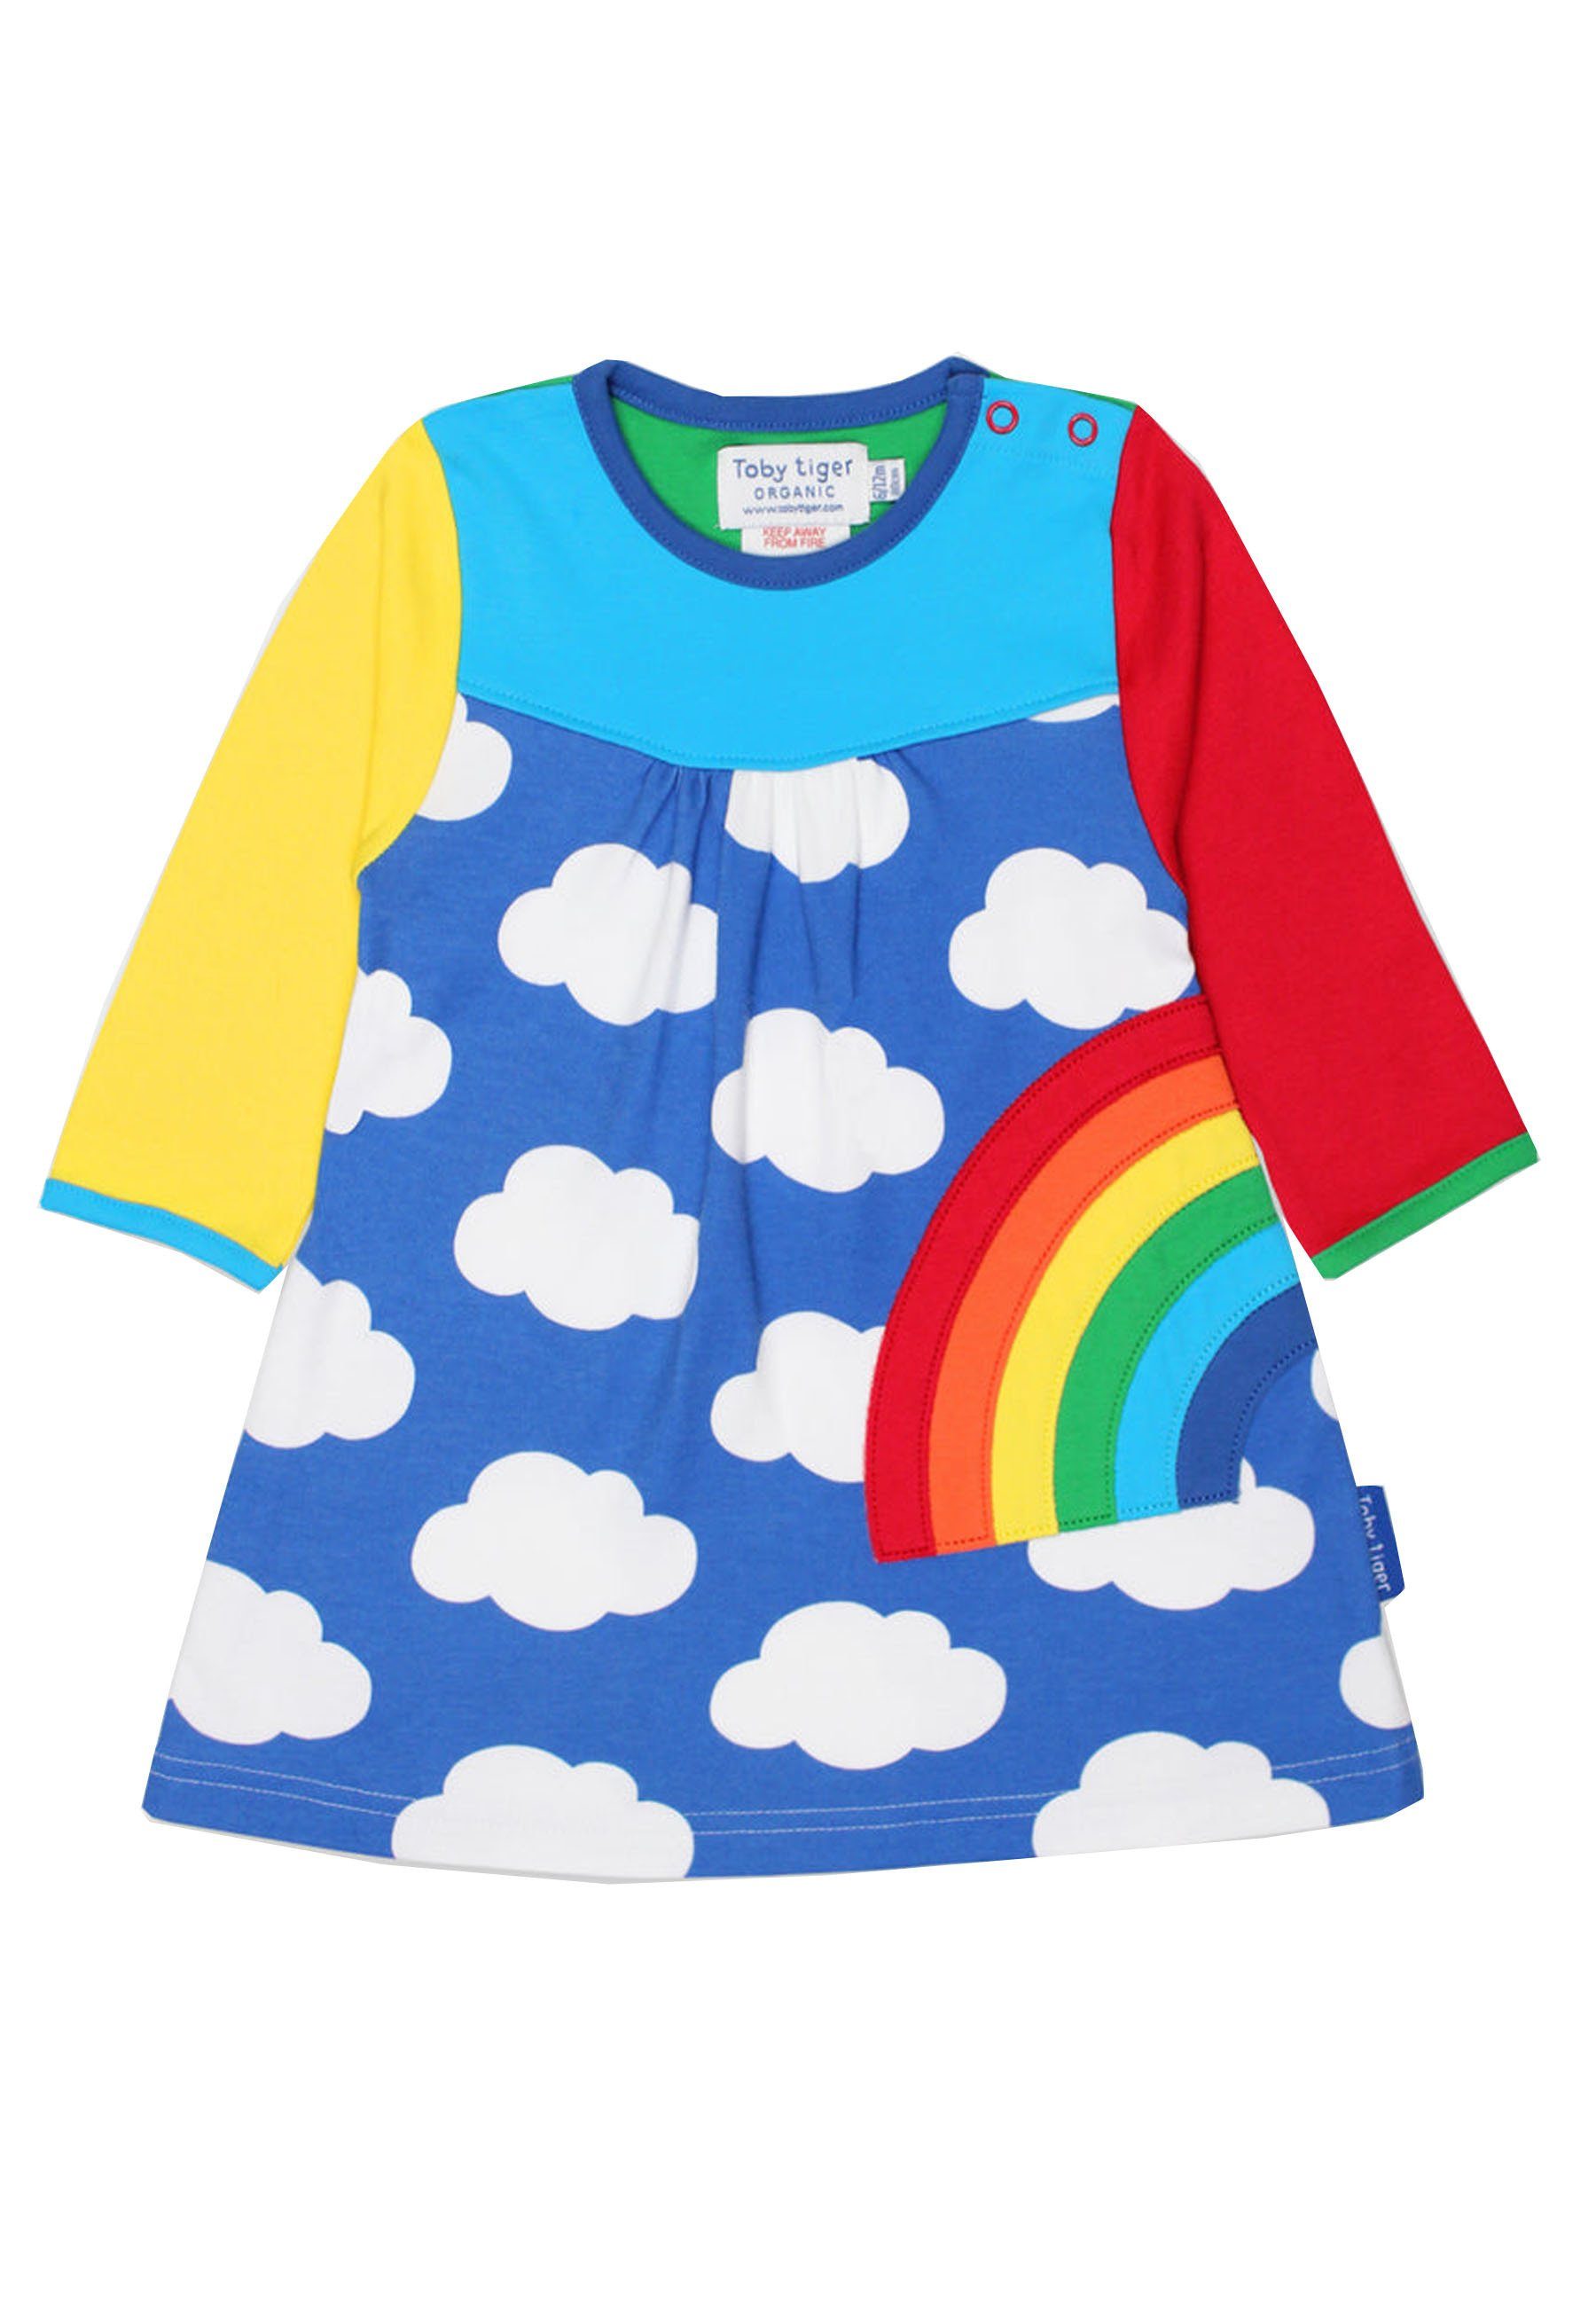 Toby Tiger Shirtkleid Kleid mit Regenbogen Applikation